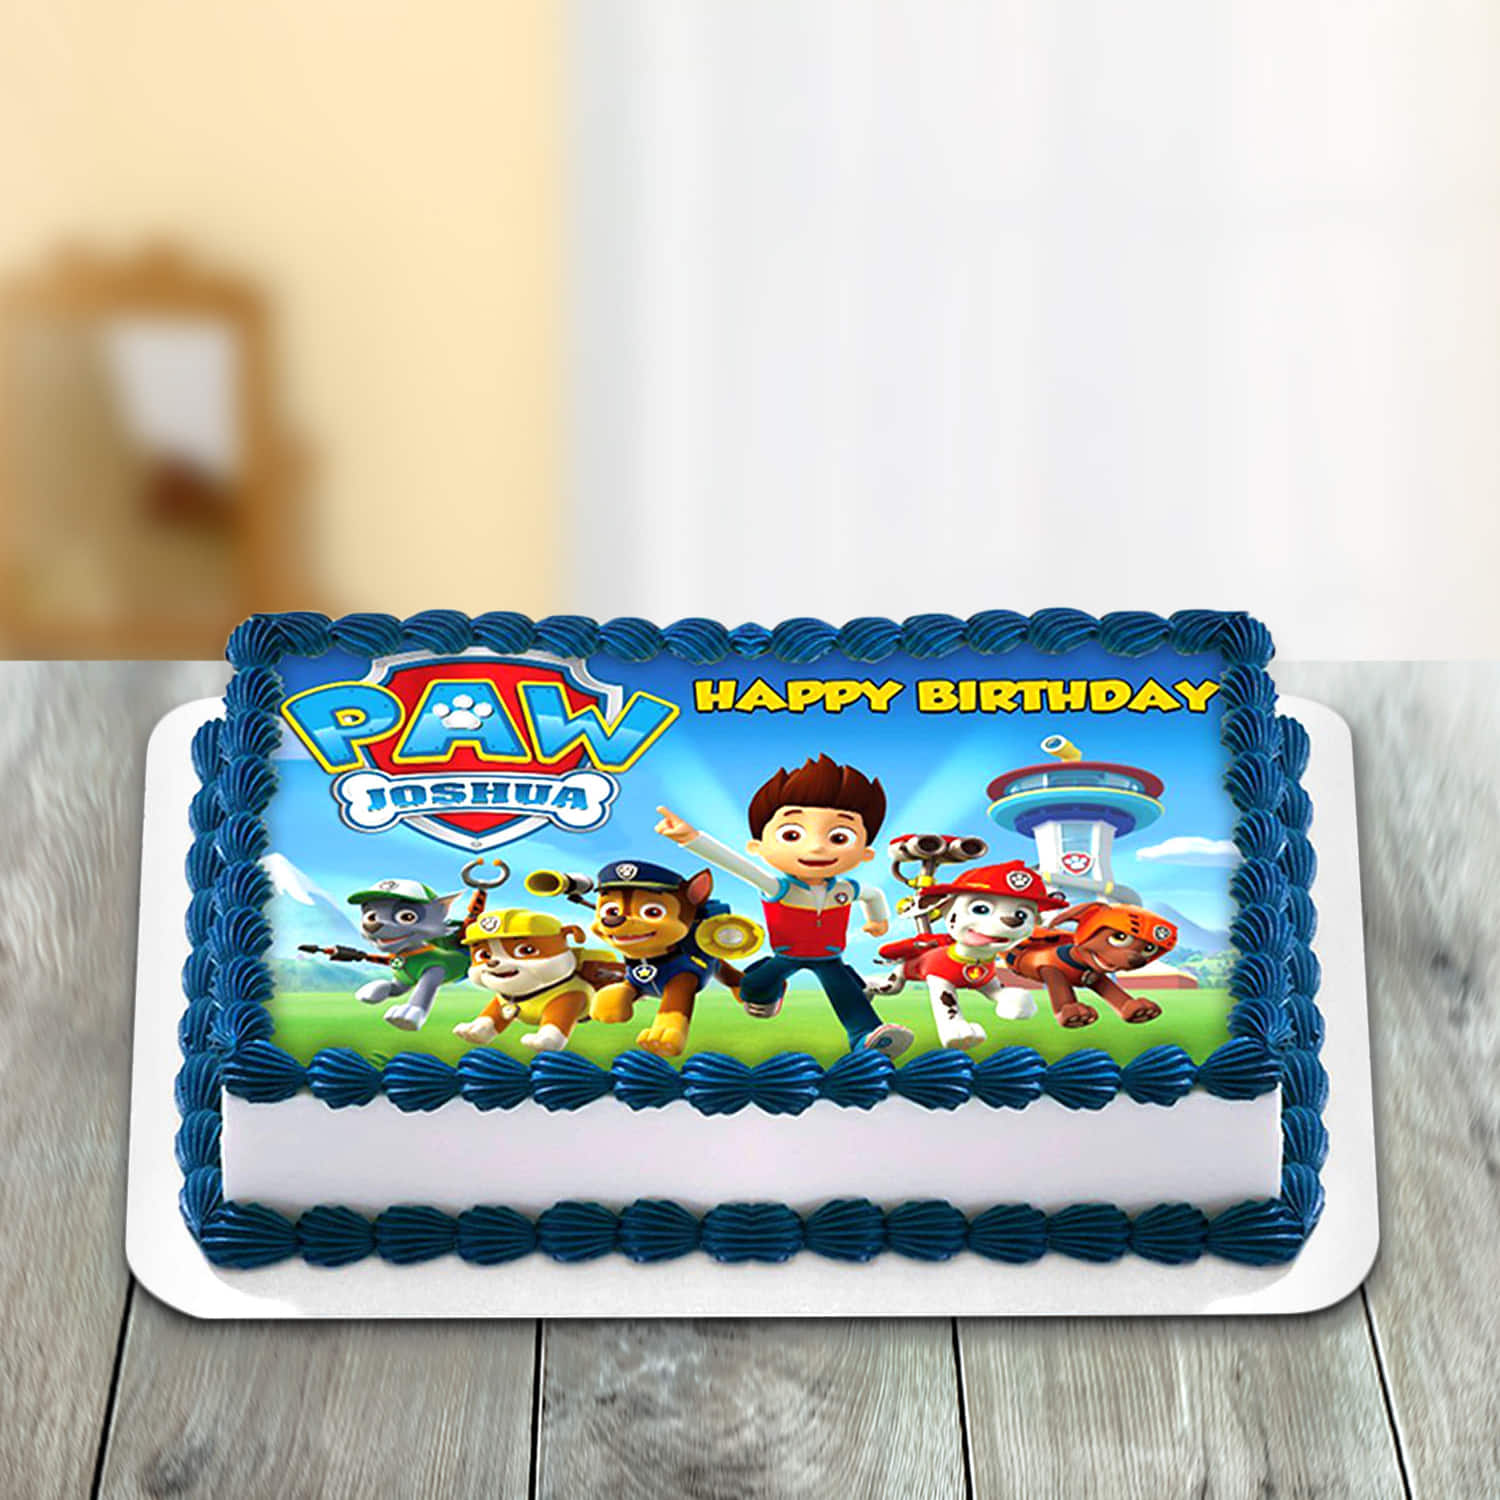 PAW PATROL Edible Party Cake topper image Decoration | eBay